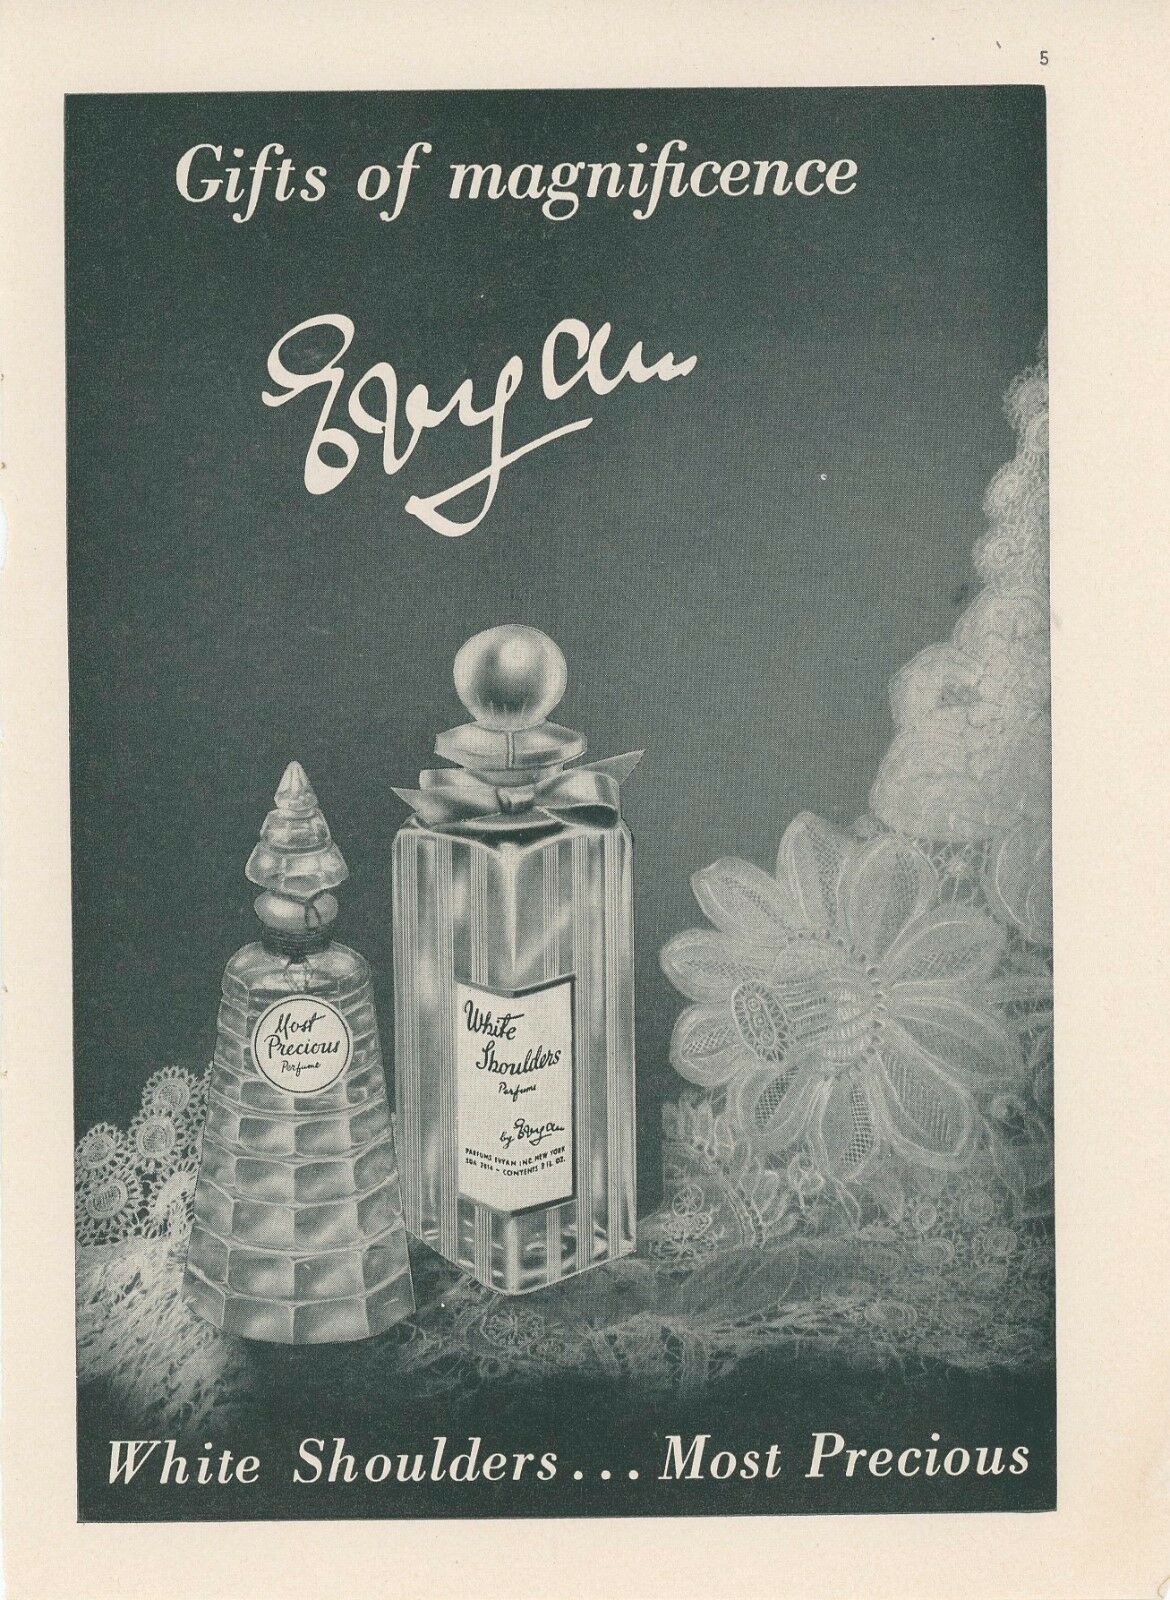 White Shoulders Evyan perfume - a fragrance for women 1945